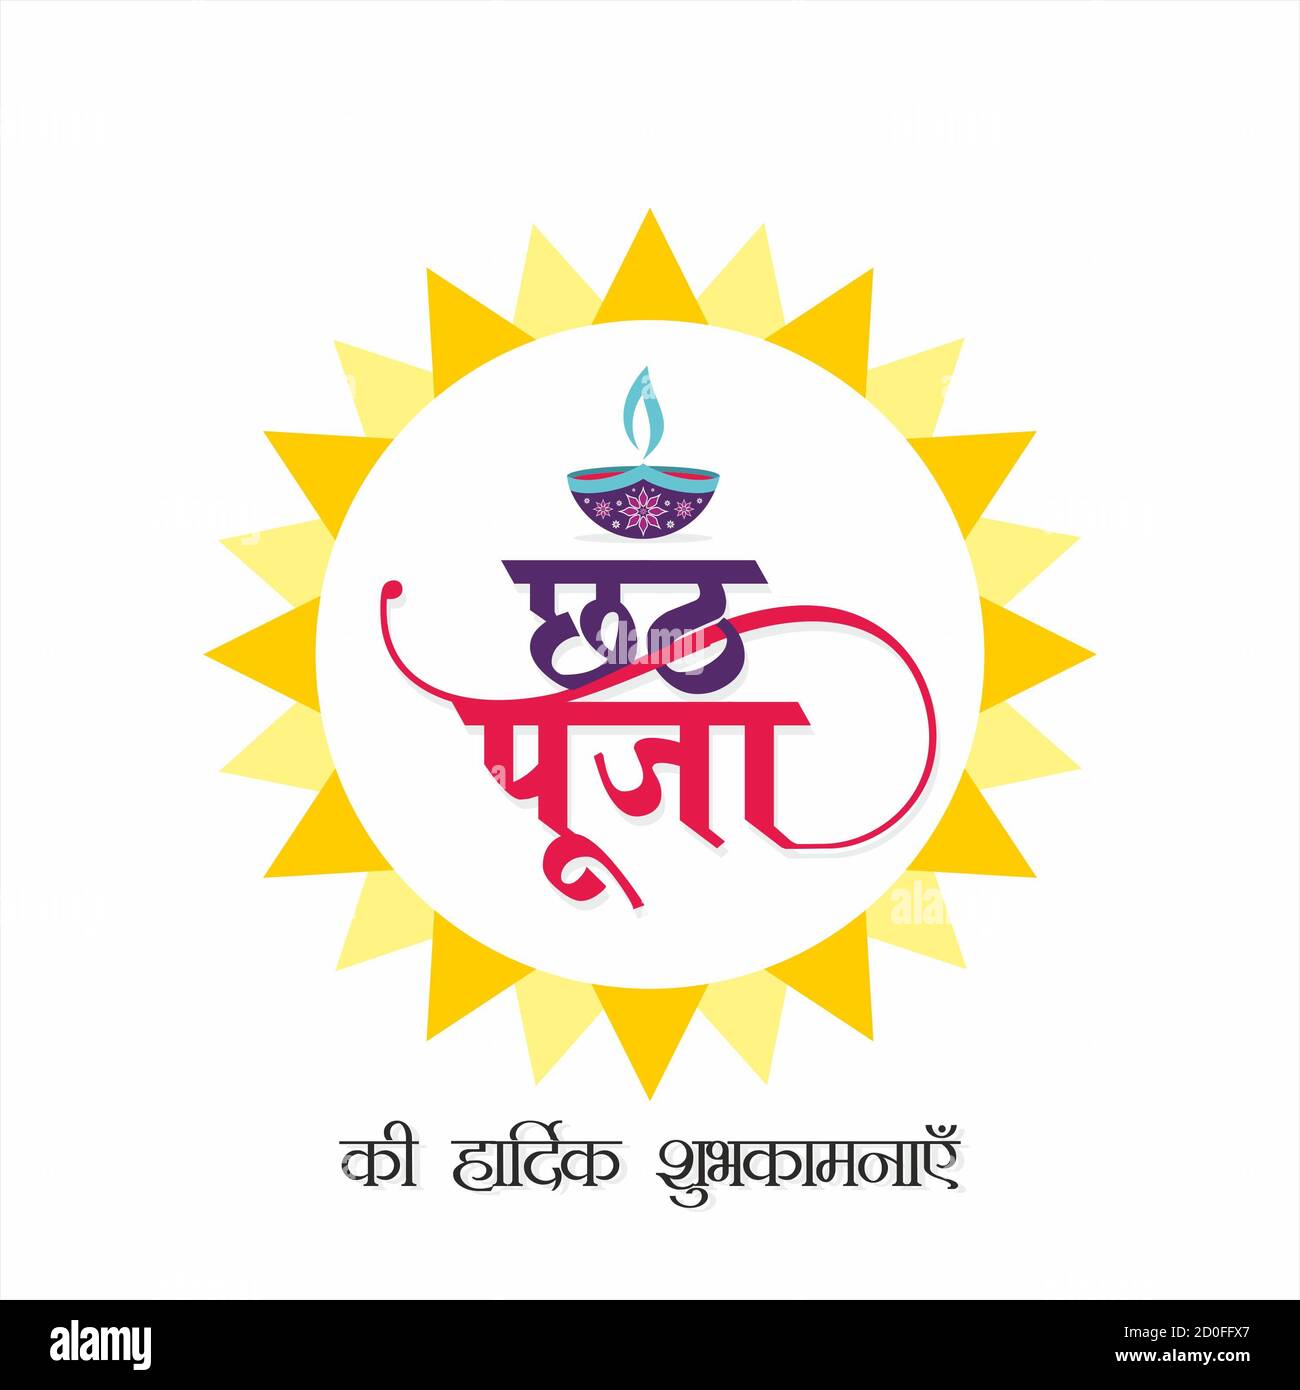 Hindi Typografie - Happy Chhath Puja - Ein Indisches Festival Stockfoto